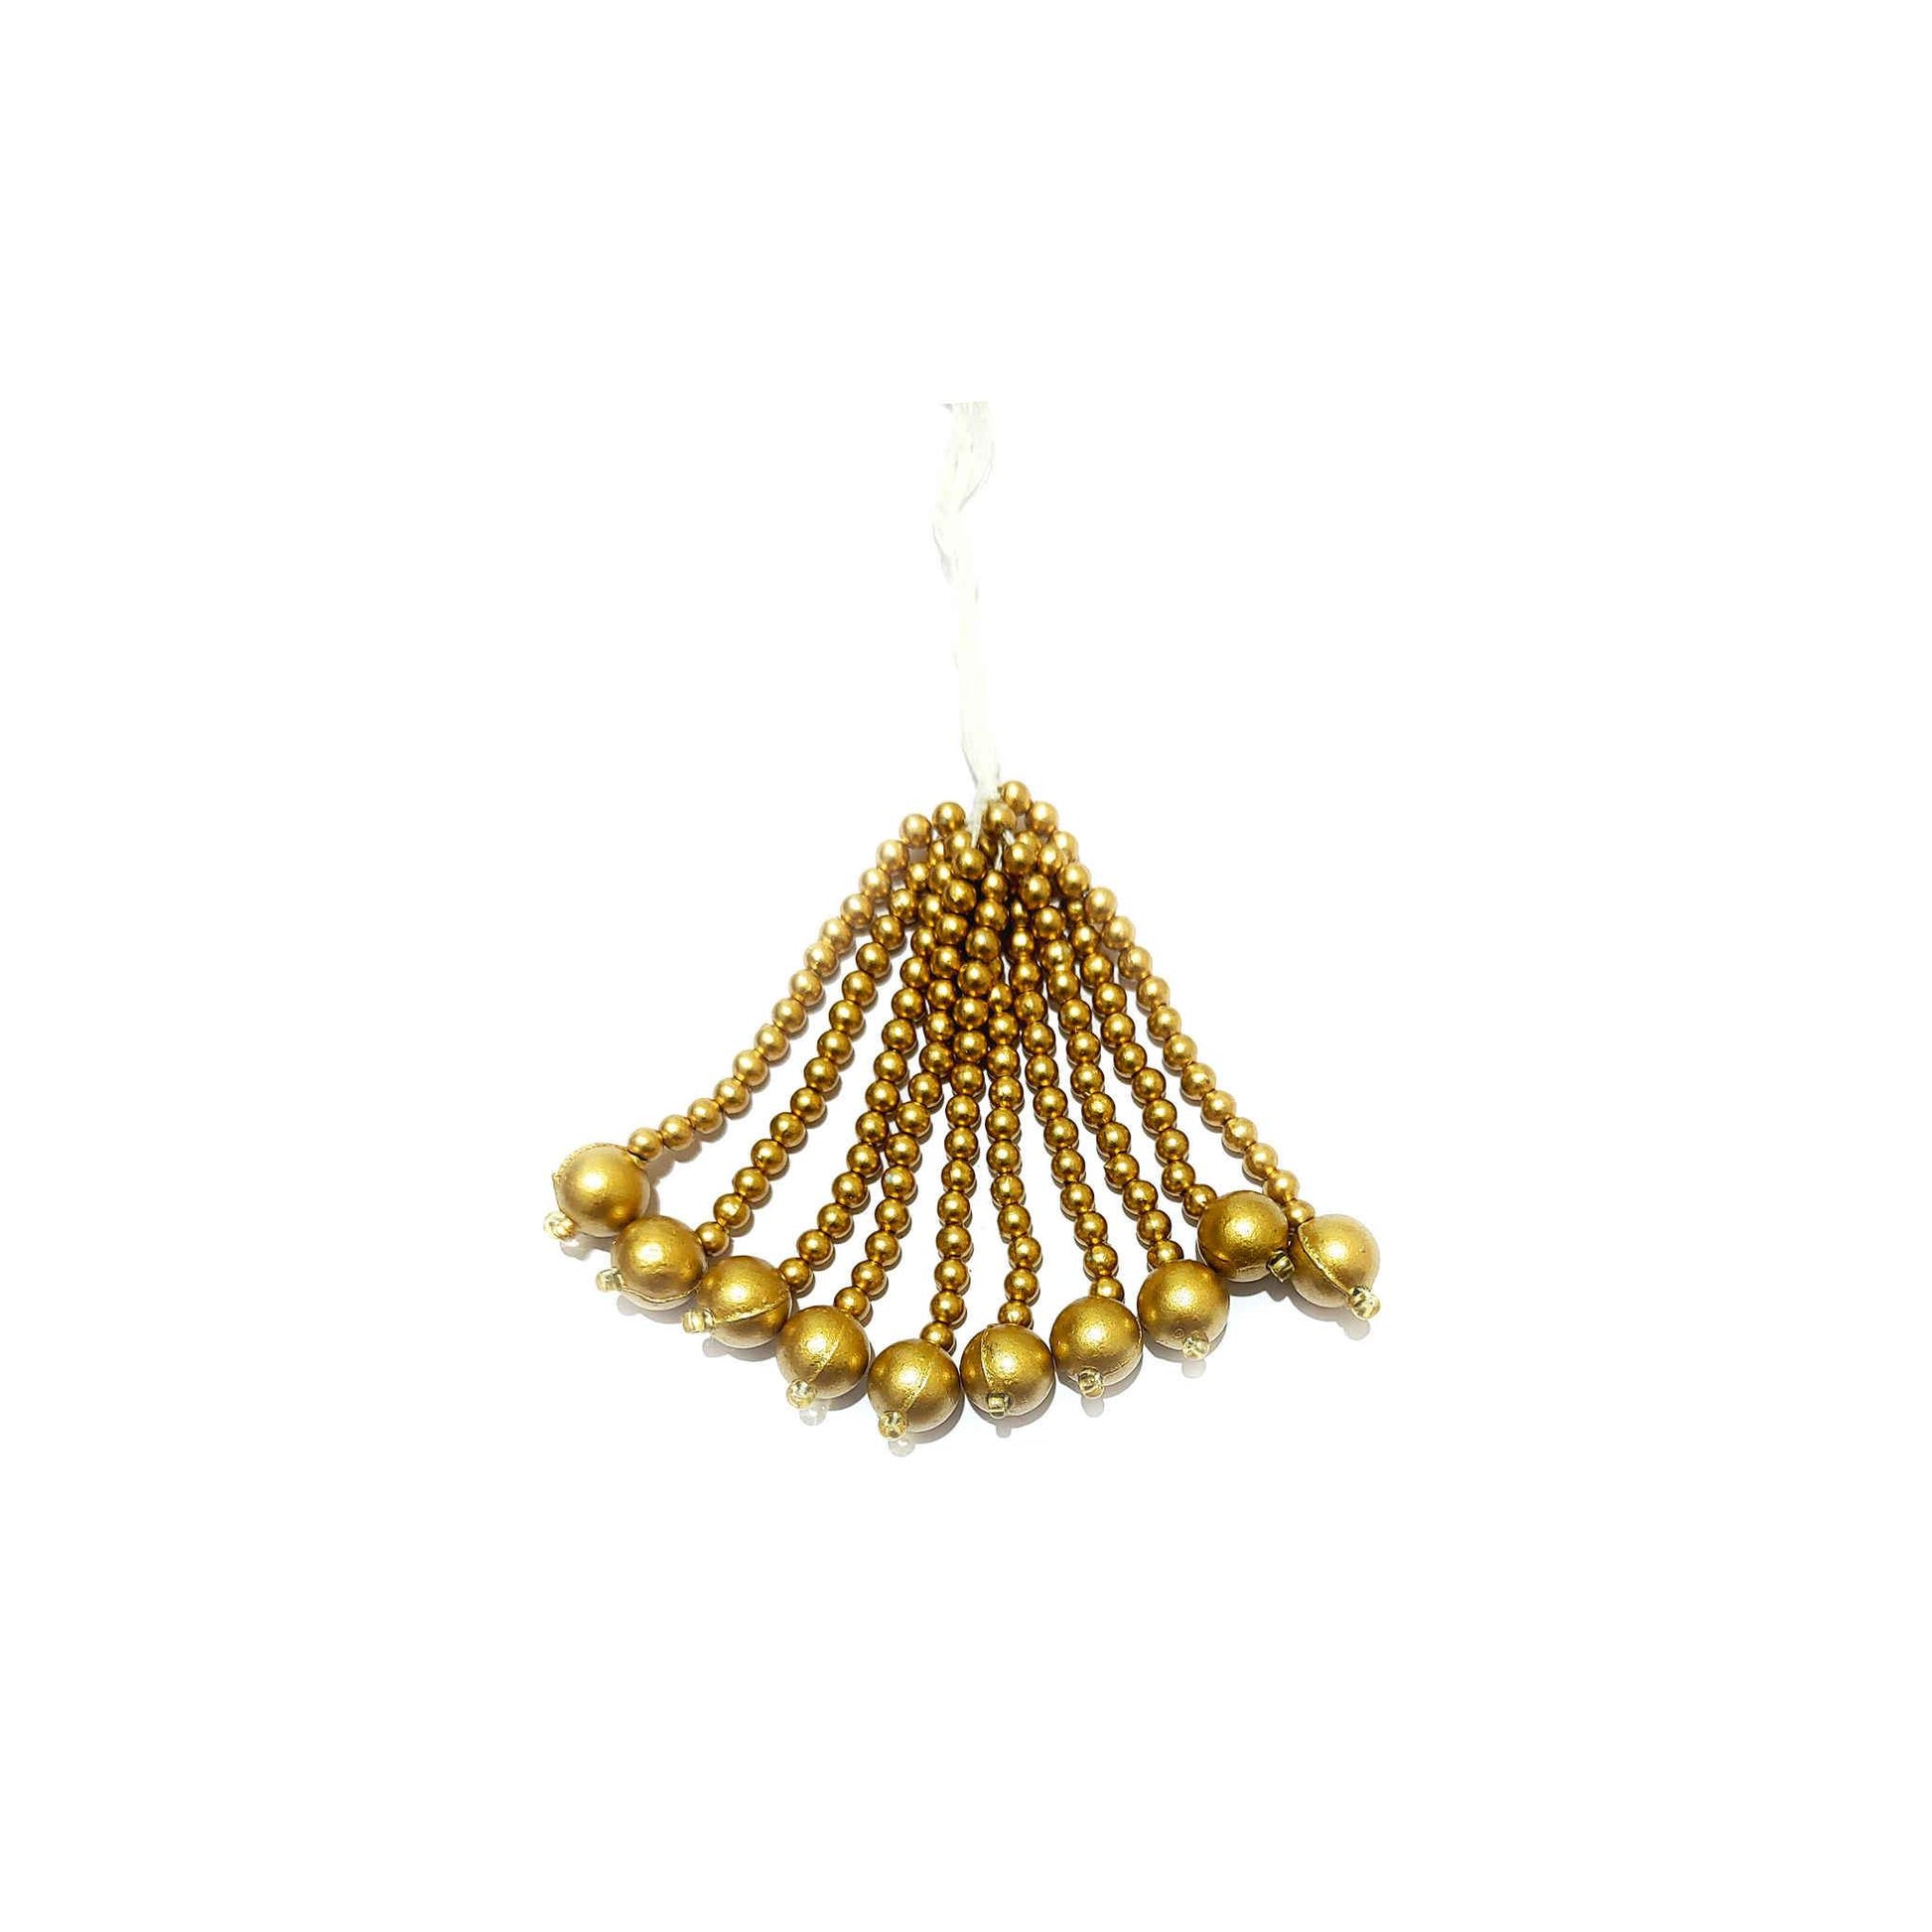 Indian Petals Handmade Gold Beaded Thread Craft, Jewelry Fringe Tassel - Design 854